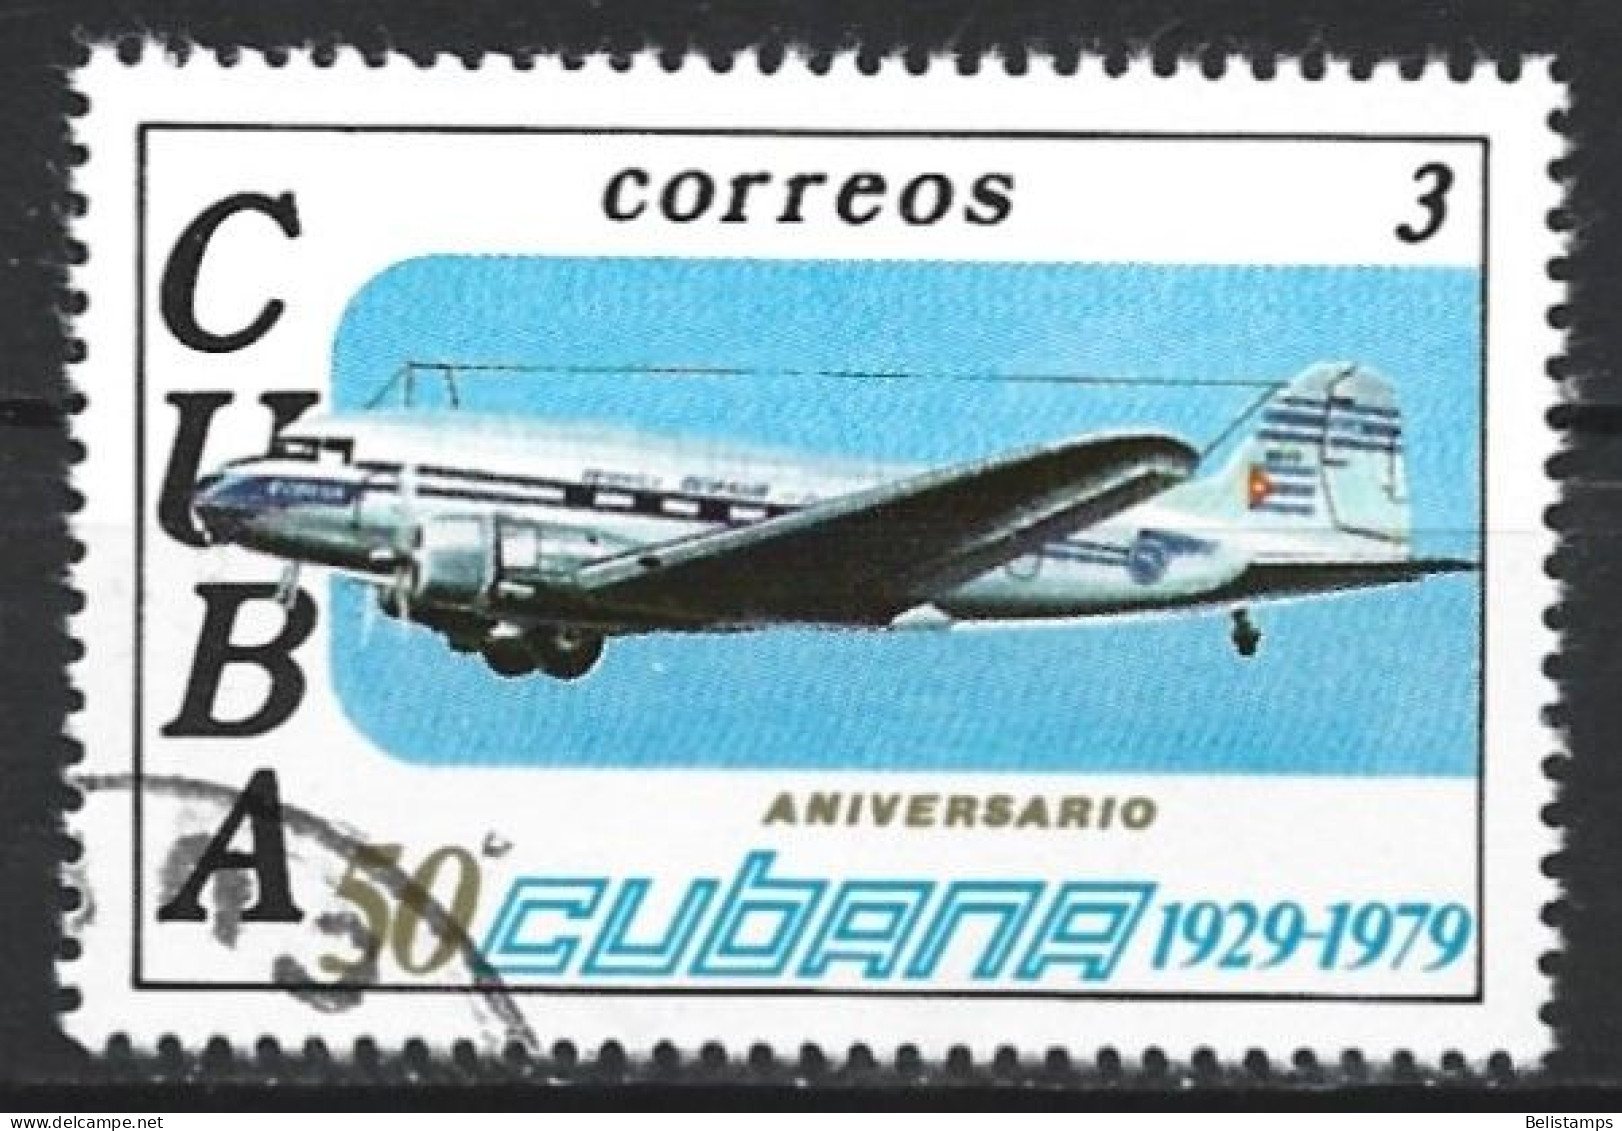 Cuba 1979. Scott #2285 (U) Cubana Airlines, 50th Anniv. Douglas DC-3 - Used Stamps